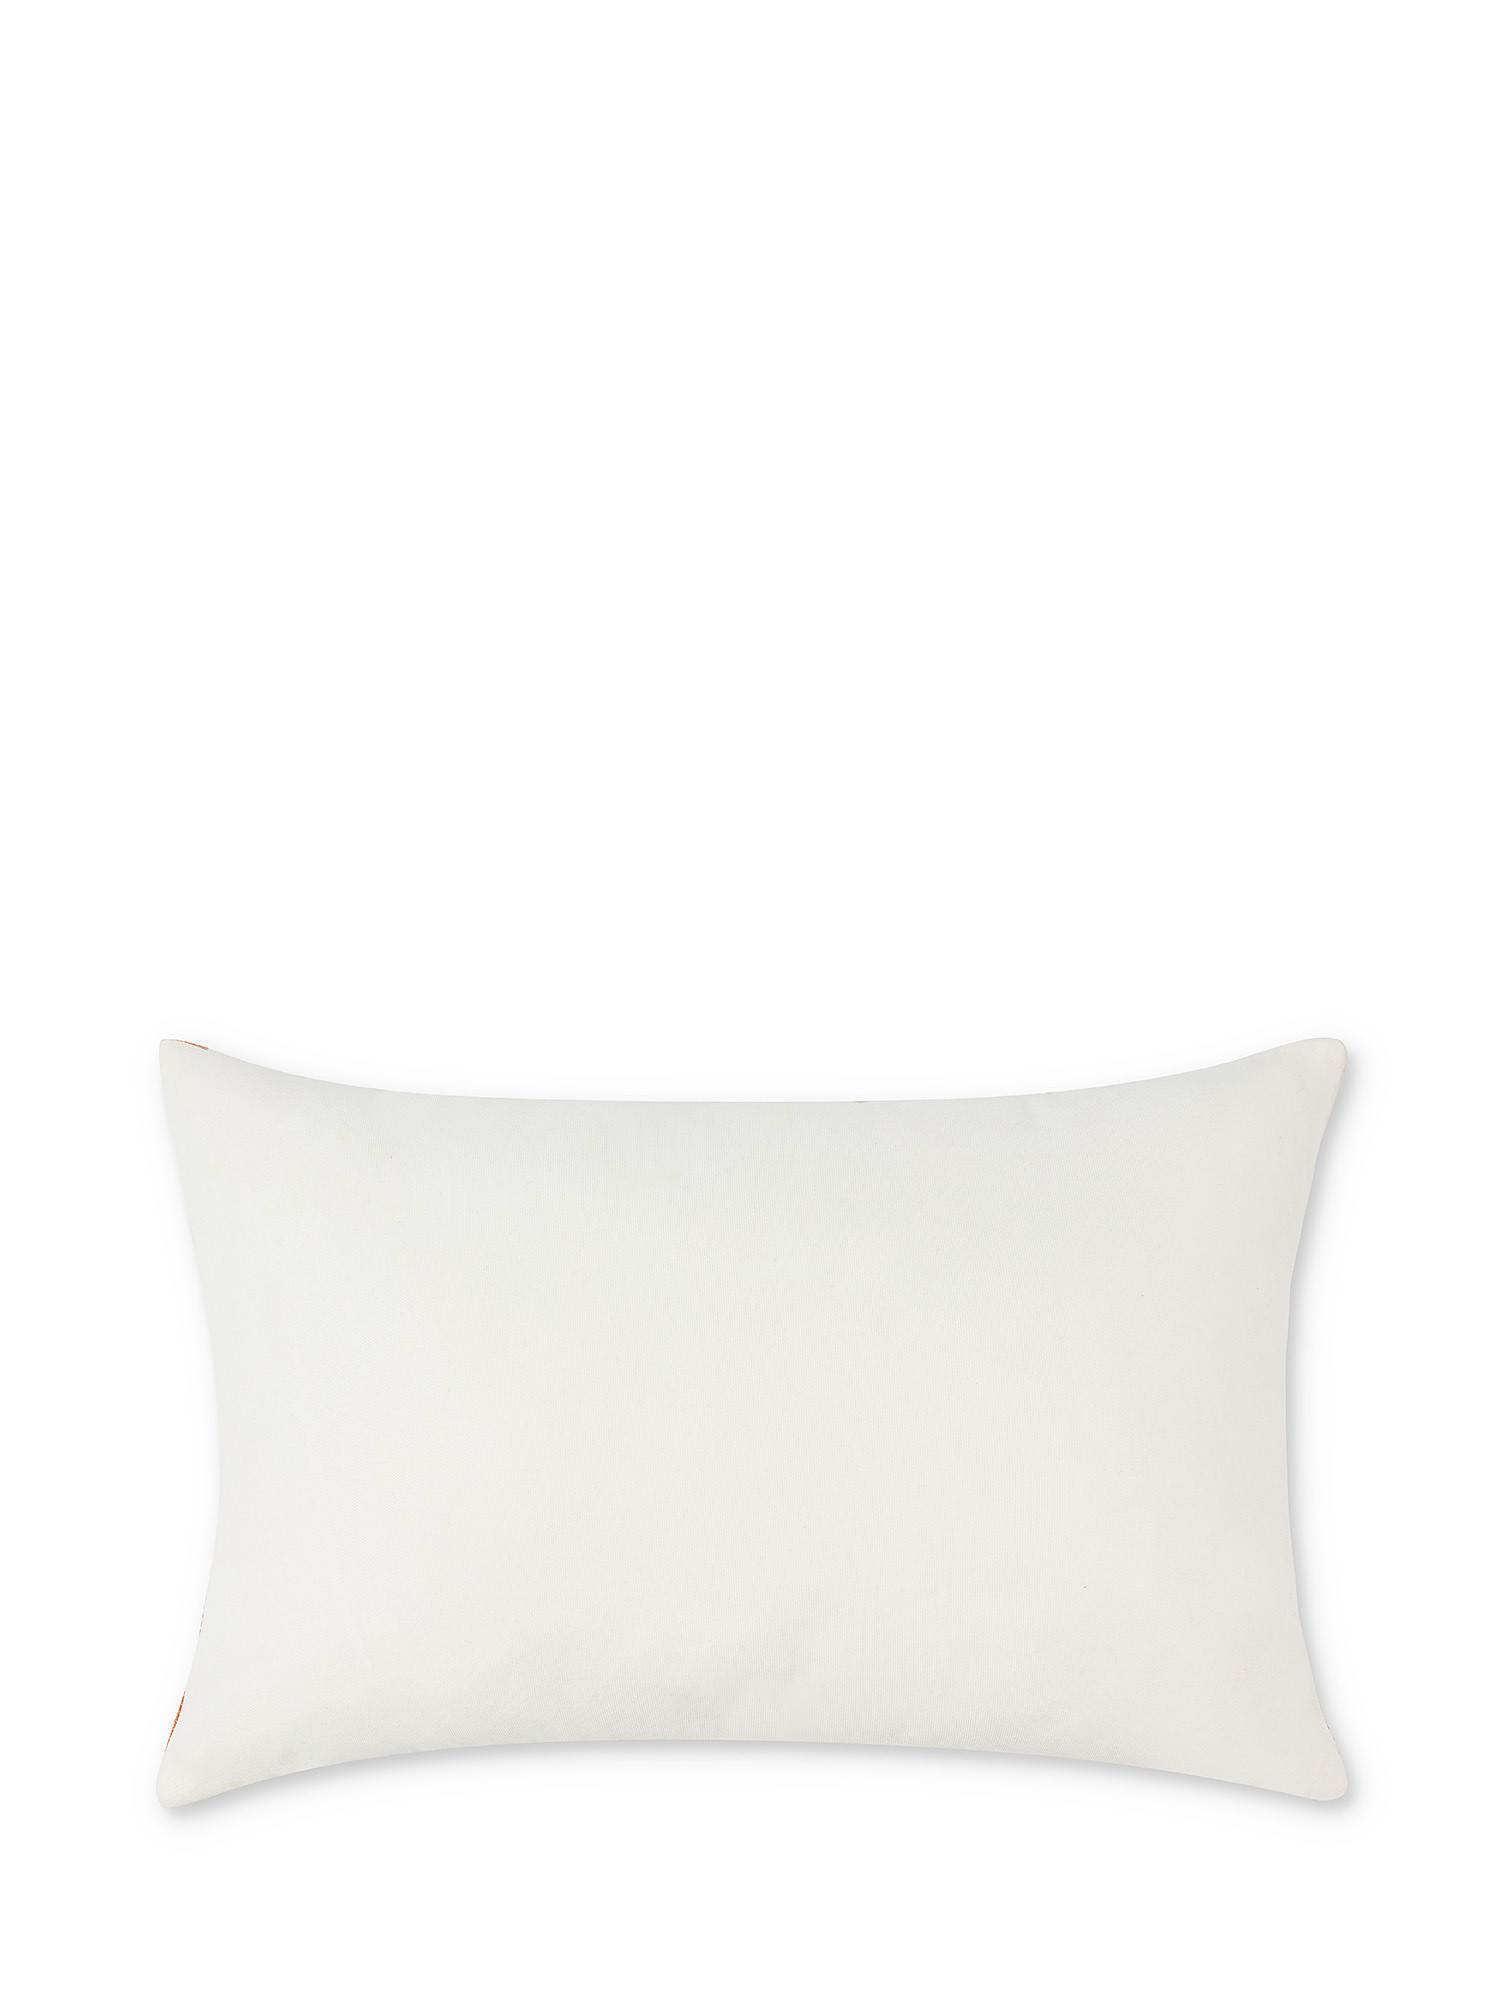 Striped jacquard fabric cushion 35x55cm, Pink, large image number 1